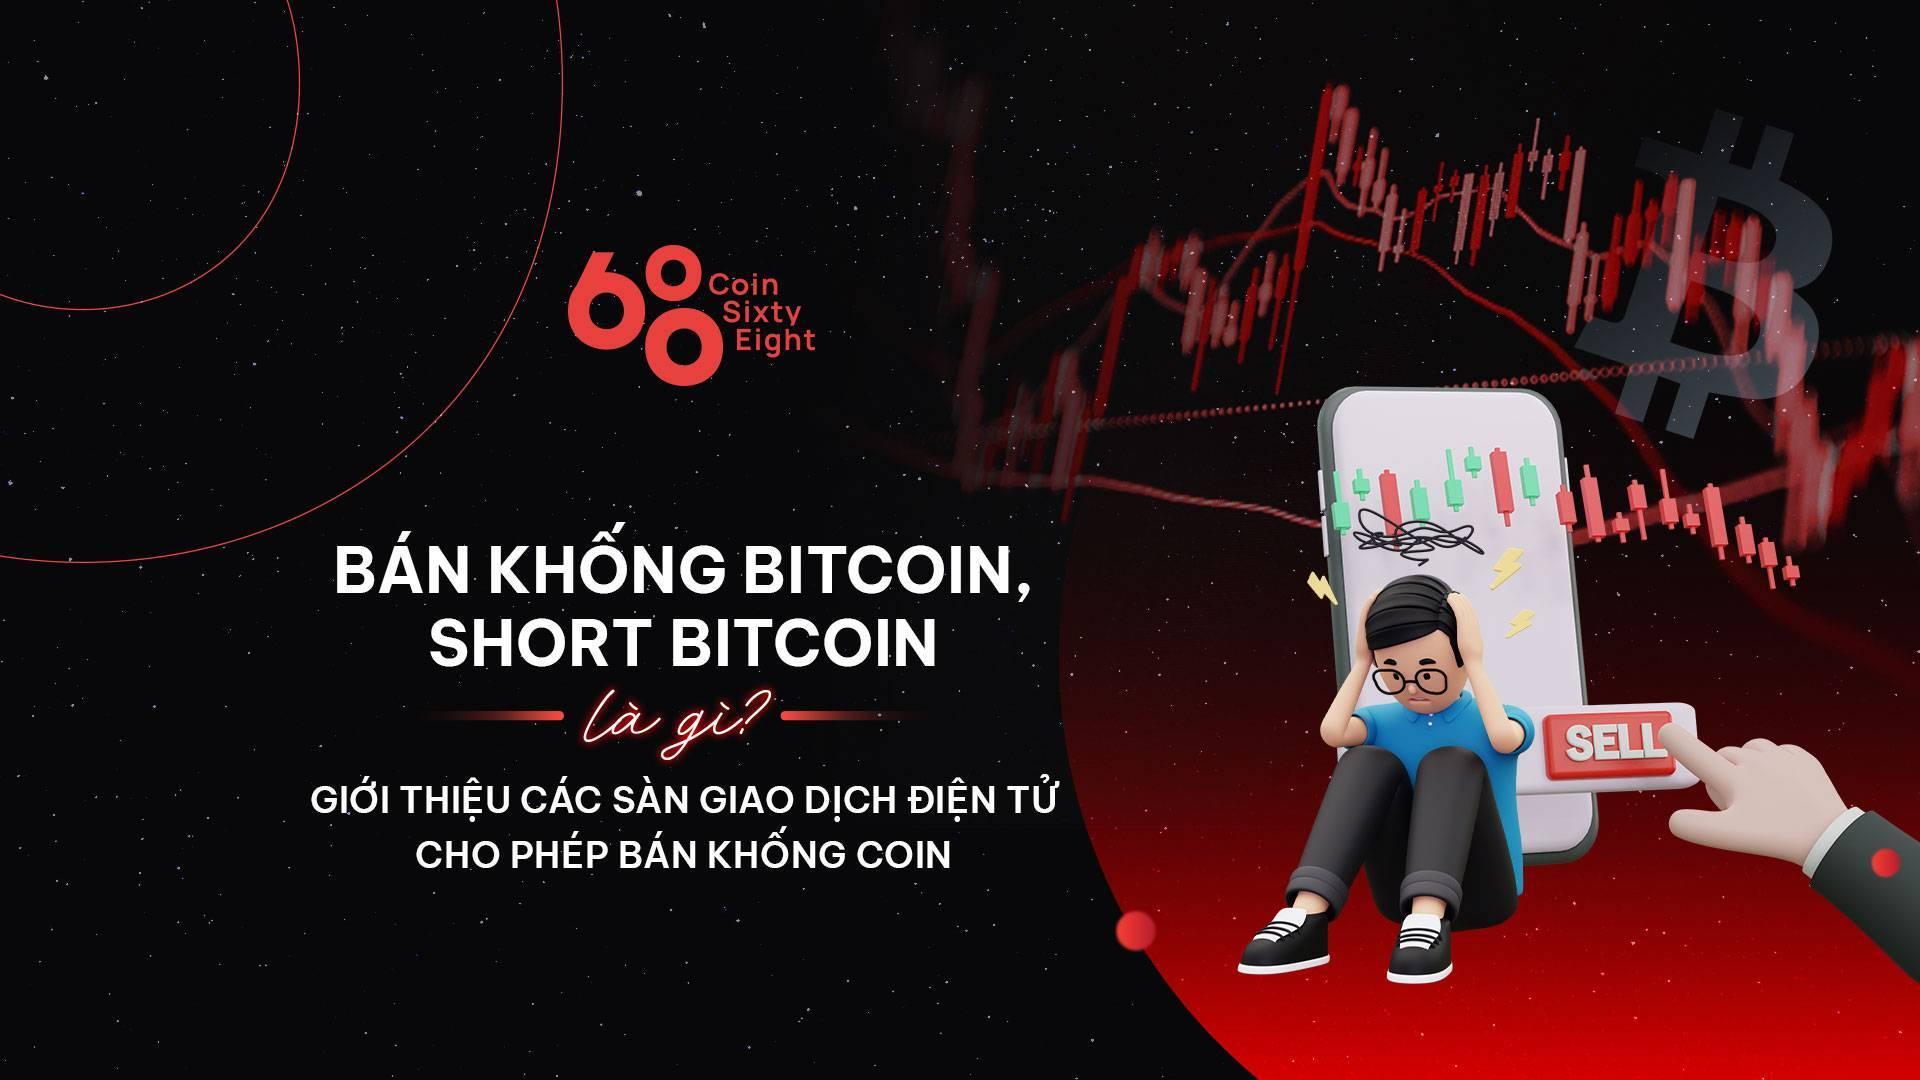 short-bitcoin-la-gi-ban-khong-bitcoin-la-gi-gioi-thieu-cac-san-giao-dich-cho-phep-ban-khong-coin